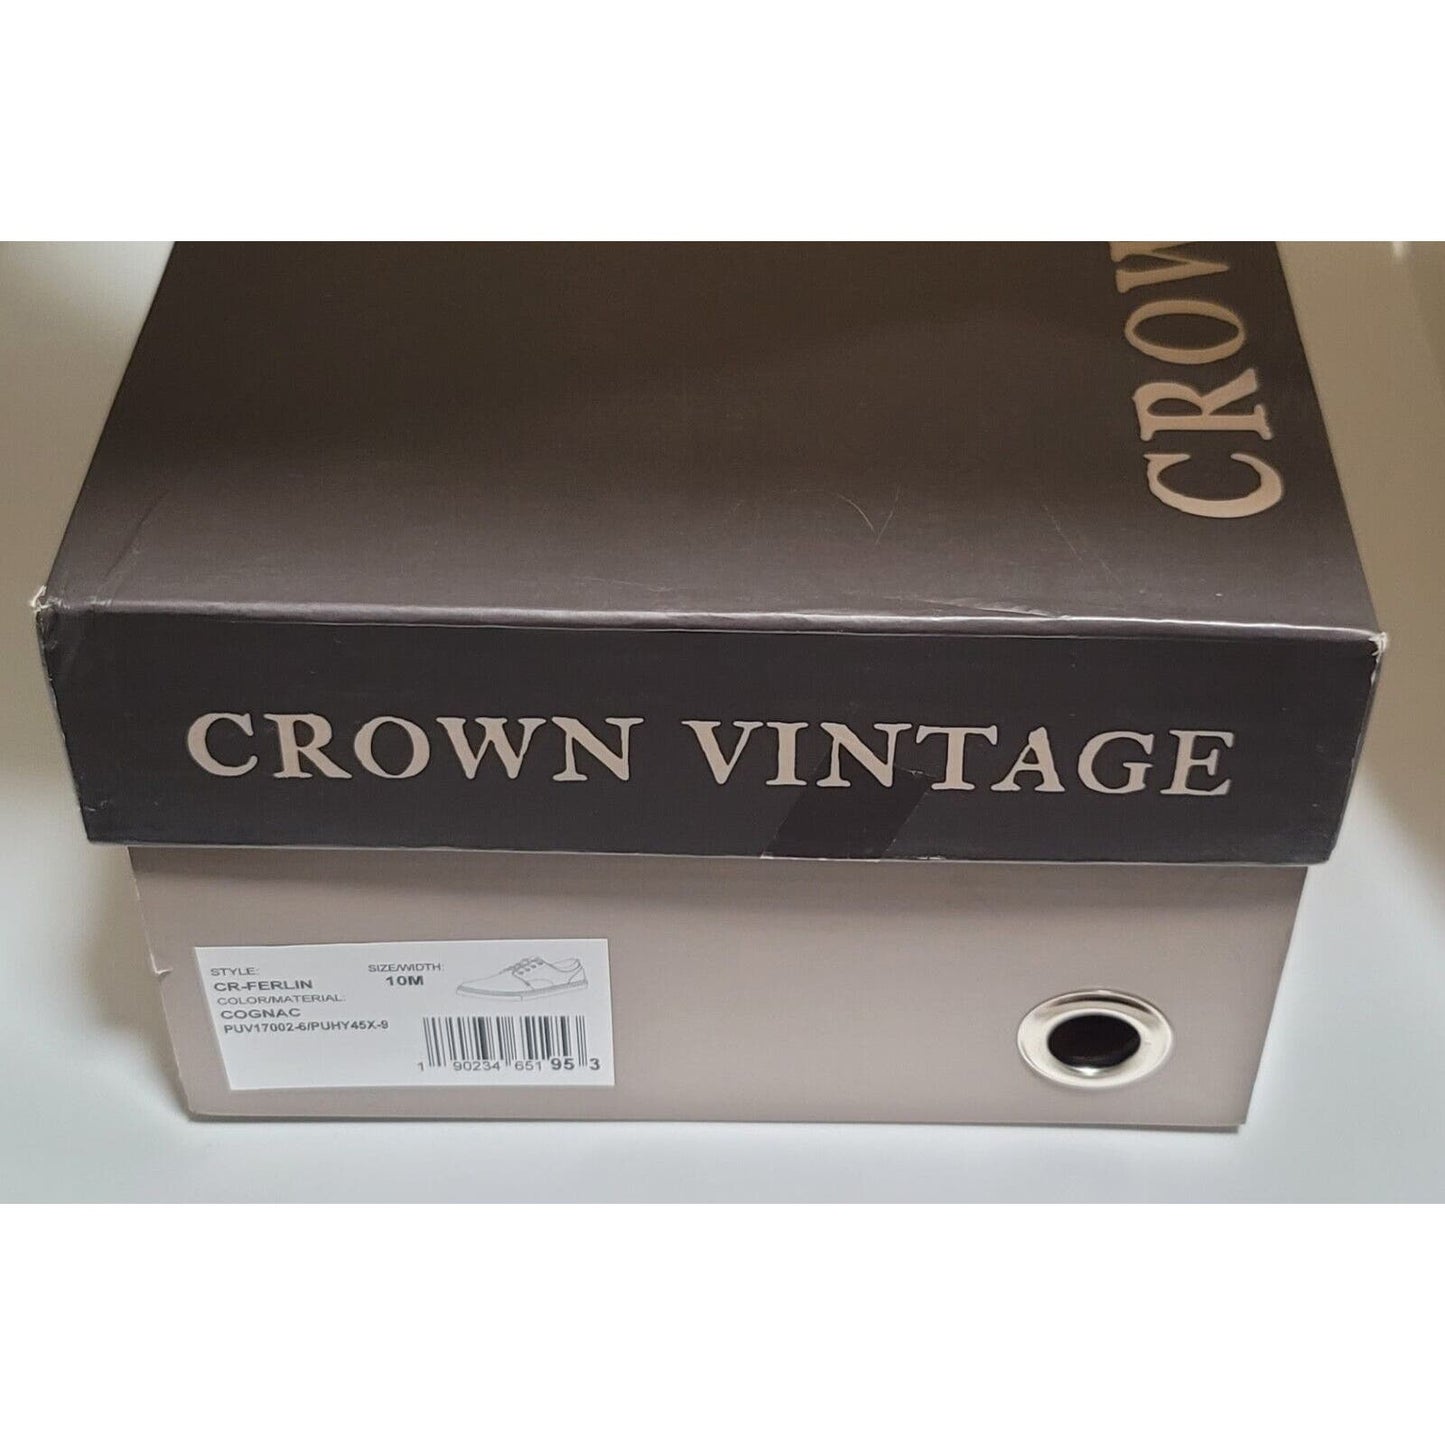 Crown Vintage Ferlin Casual Oxford, Men's Size 10 M, Brown NEW MSRP $80